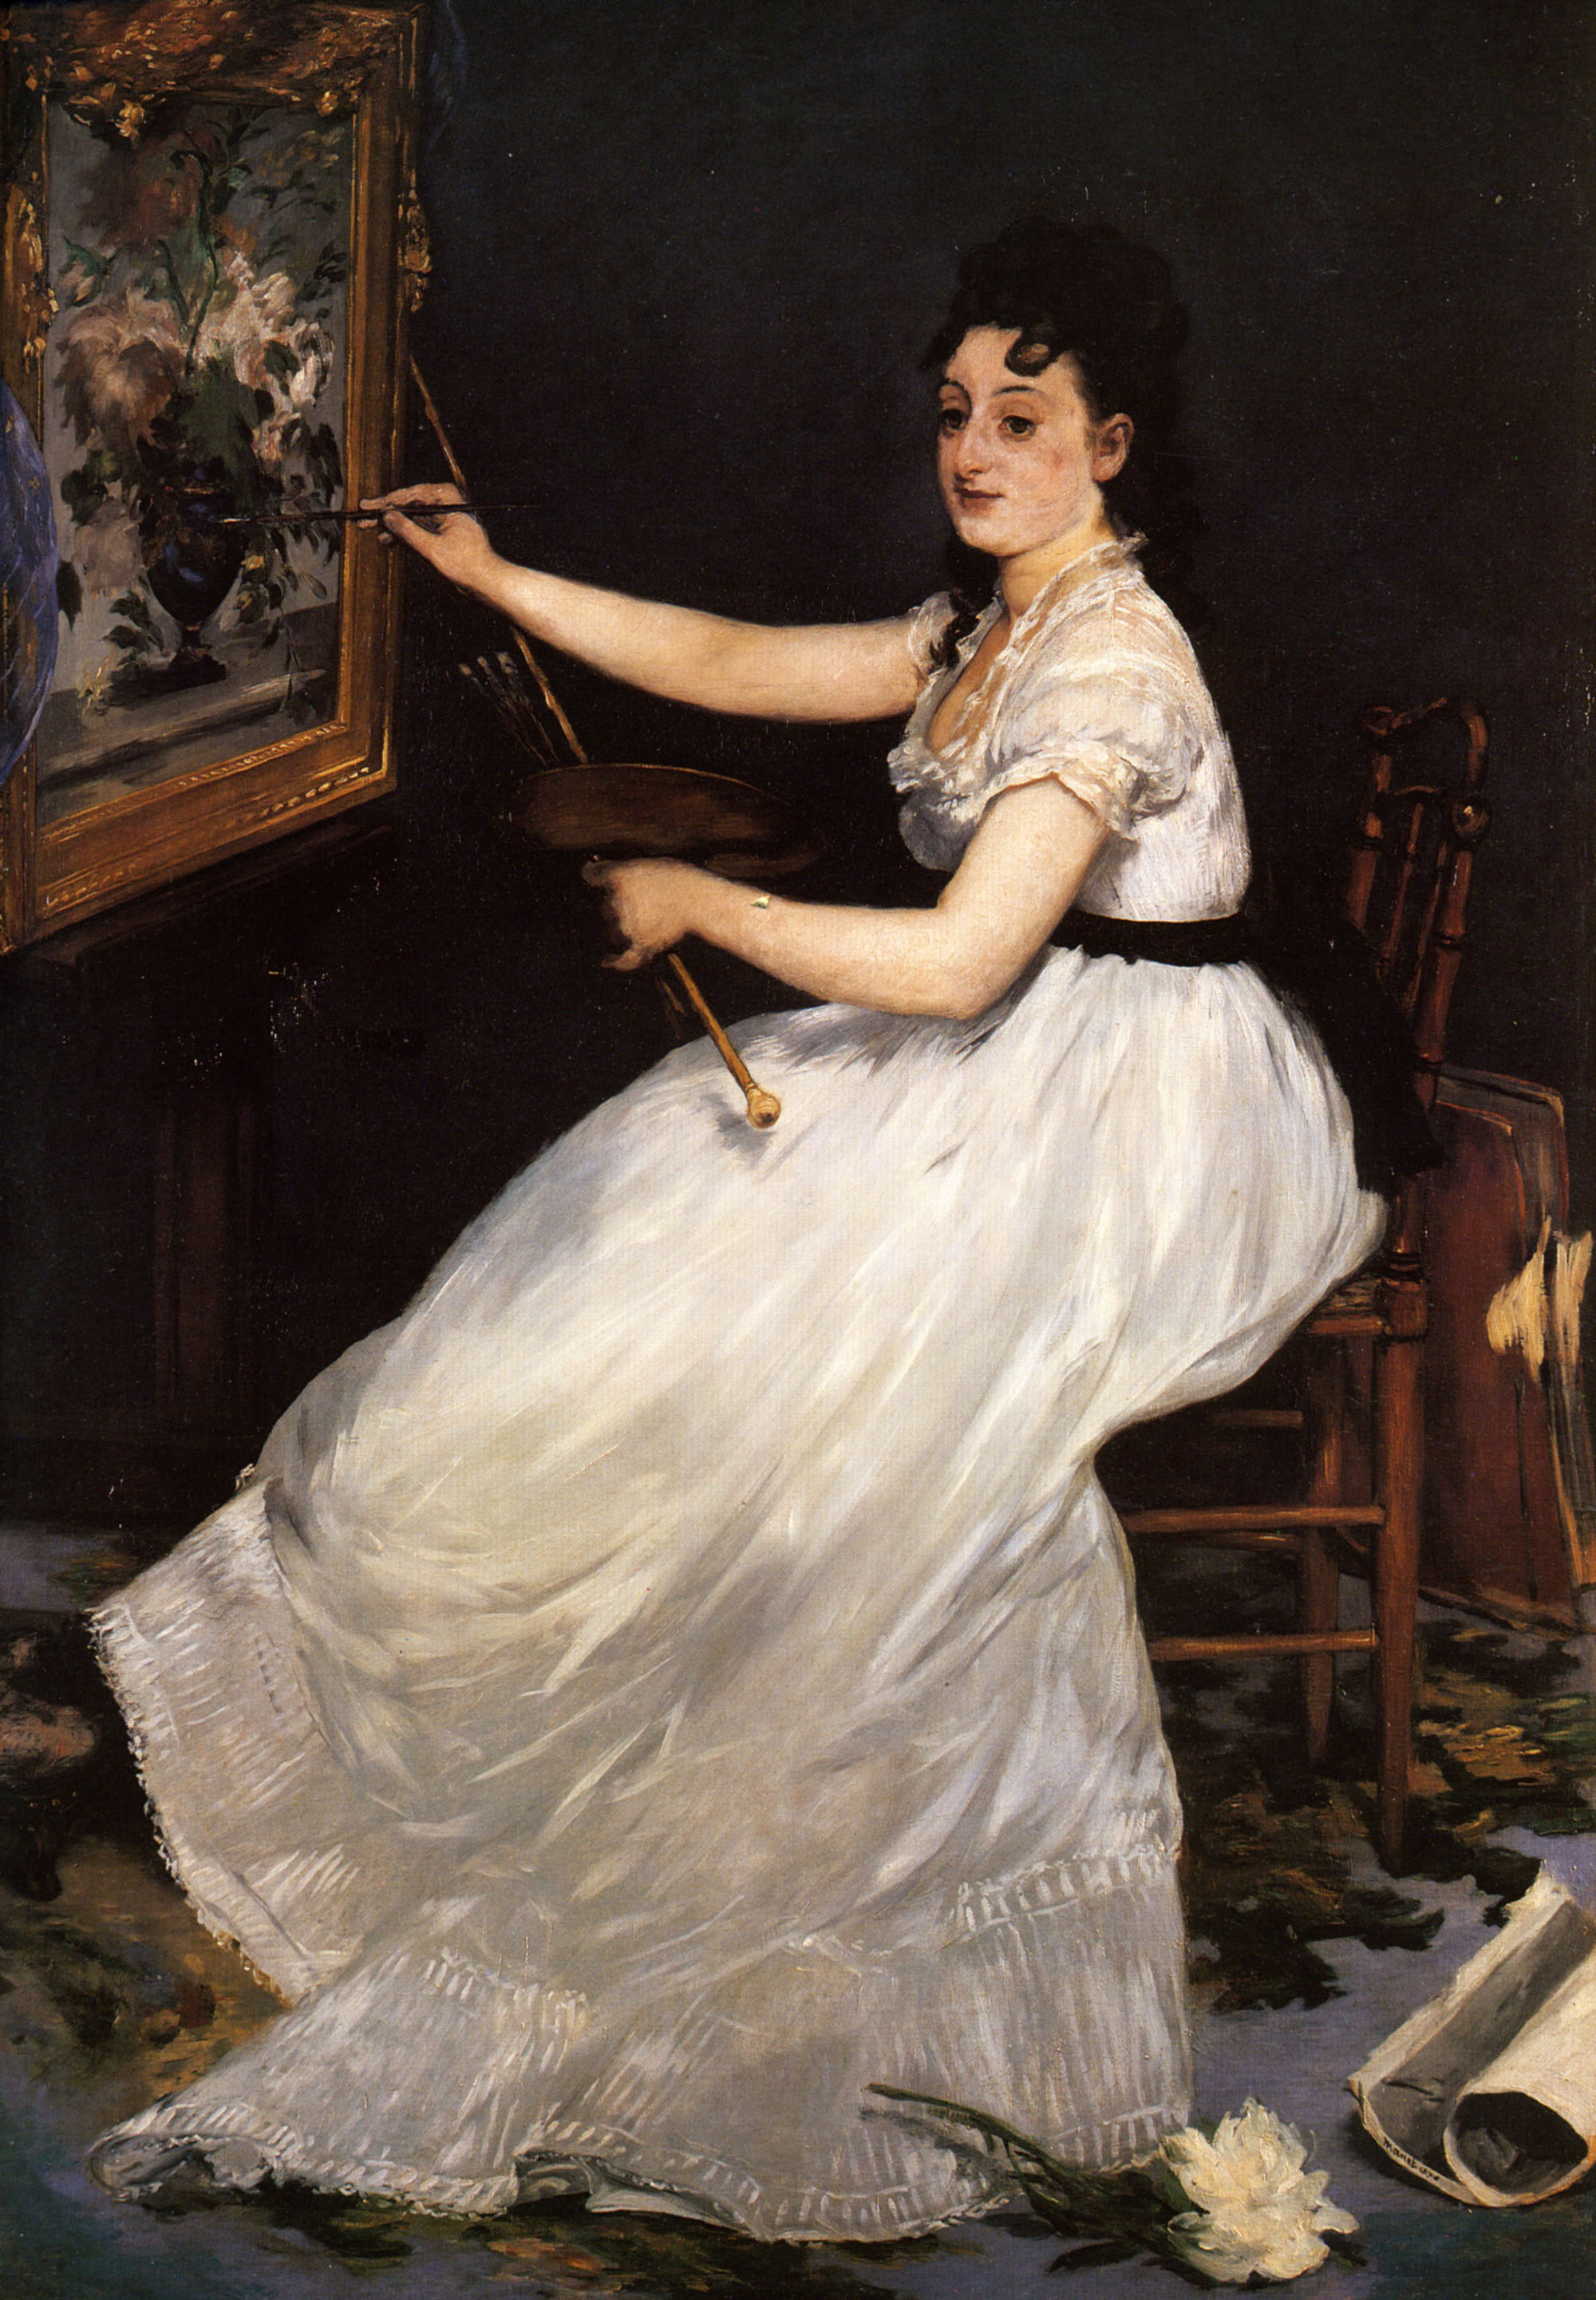 Эдуард Мане. "Портрет Евы Гонсалес". 1870.